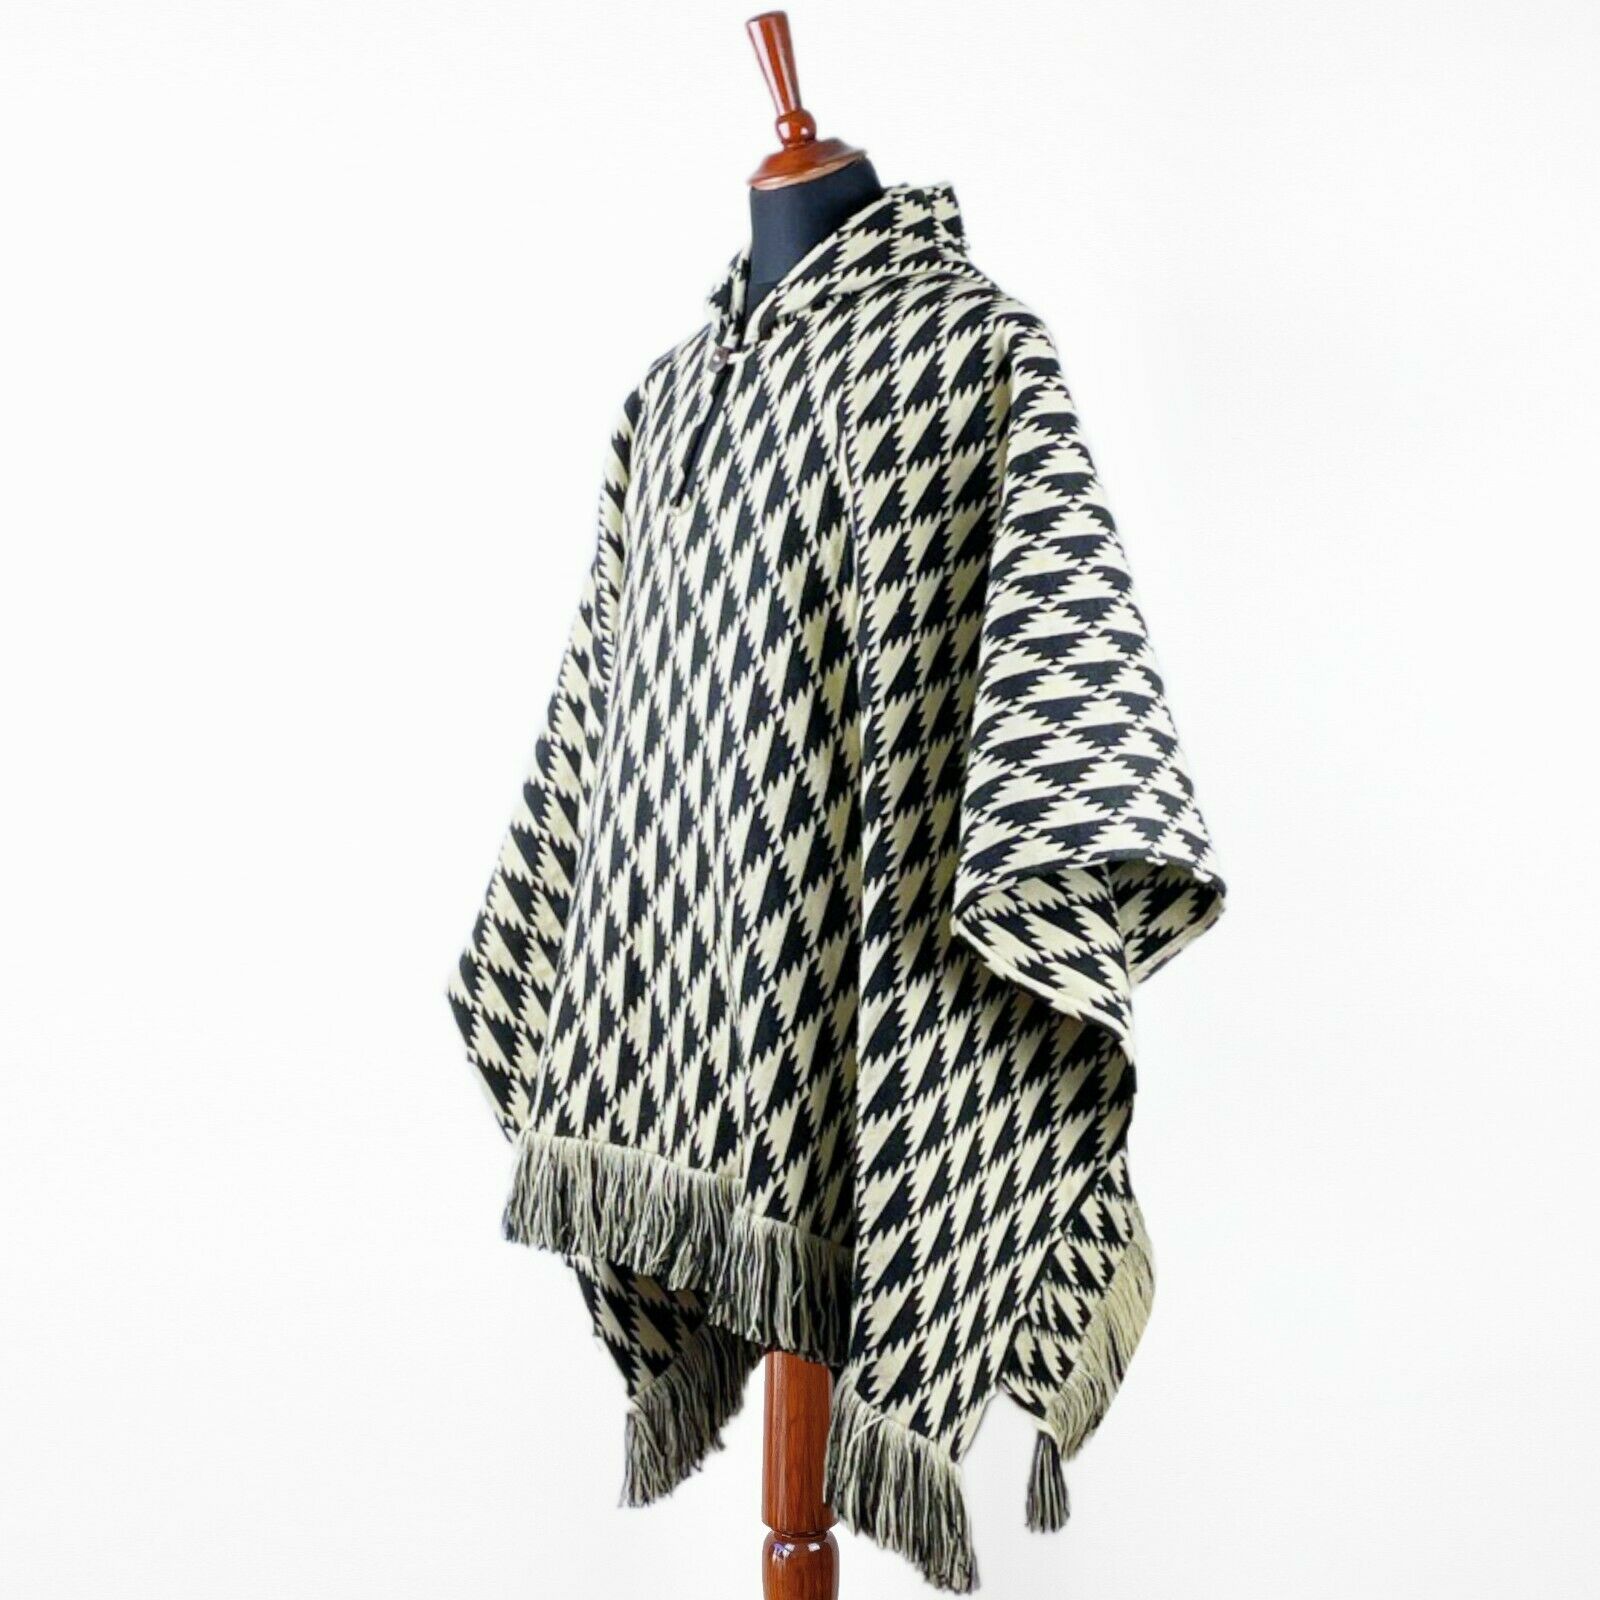 Ikian - Baby Alpaca wool Hooded Unisex Poncho XXL - Aztec Chex pattern - Black/White